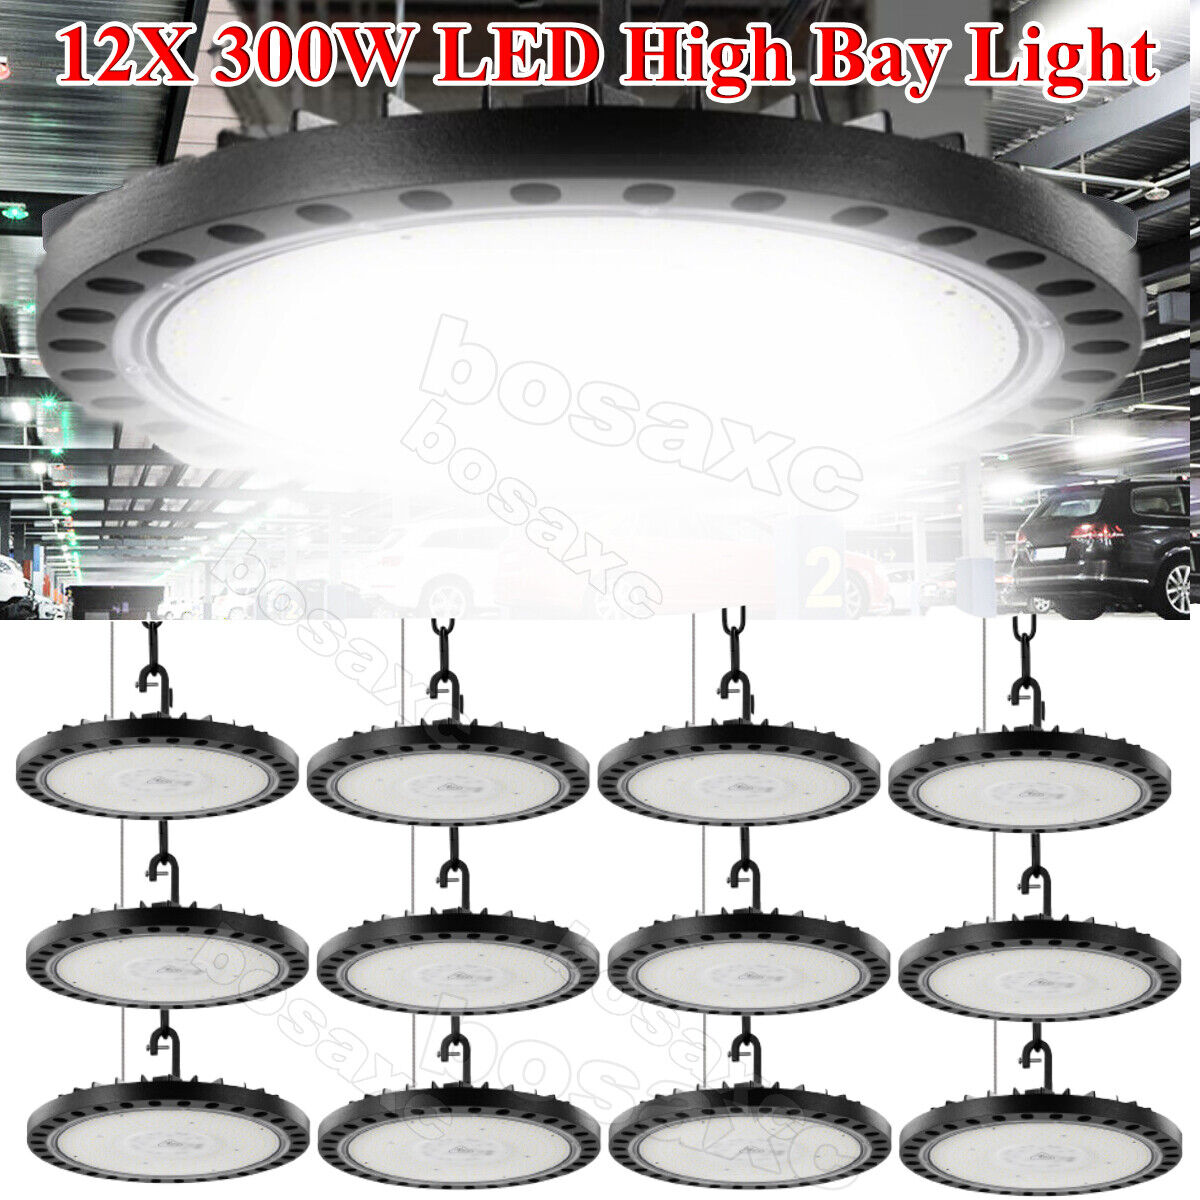 12 Pack 300W UFO Led High Bay Light Factory Warehouse Commercial Led Shop Lights